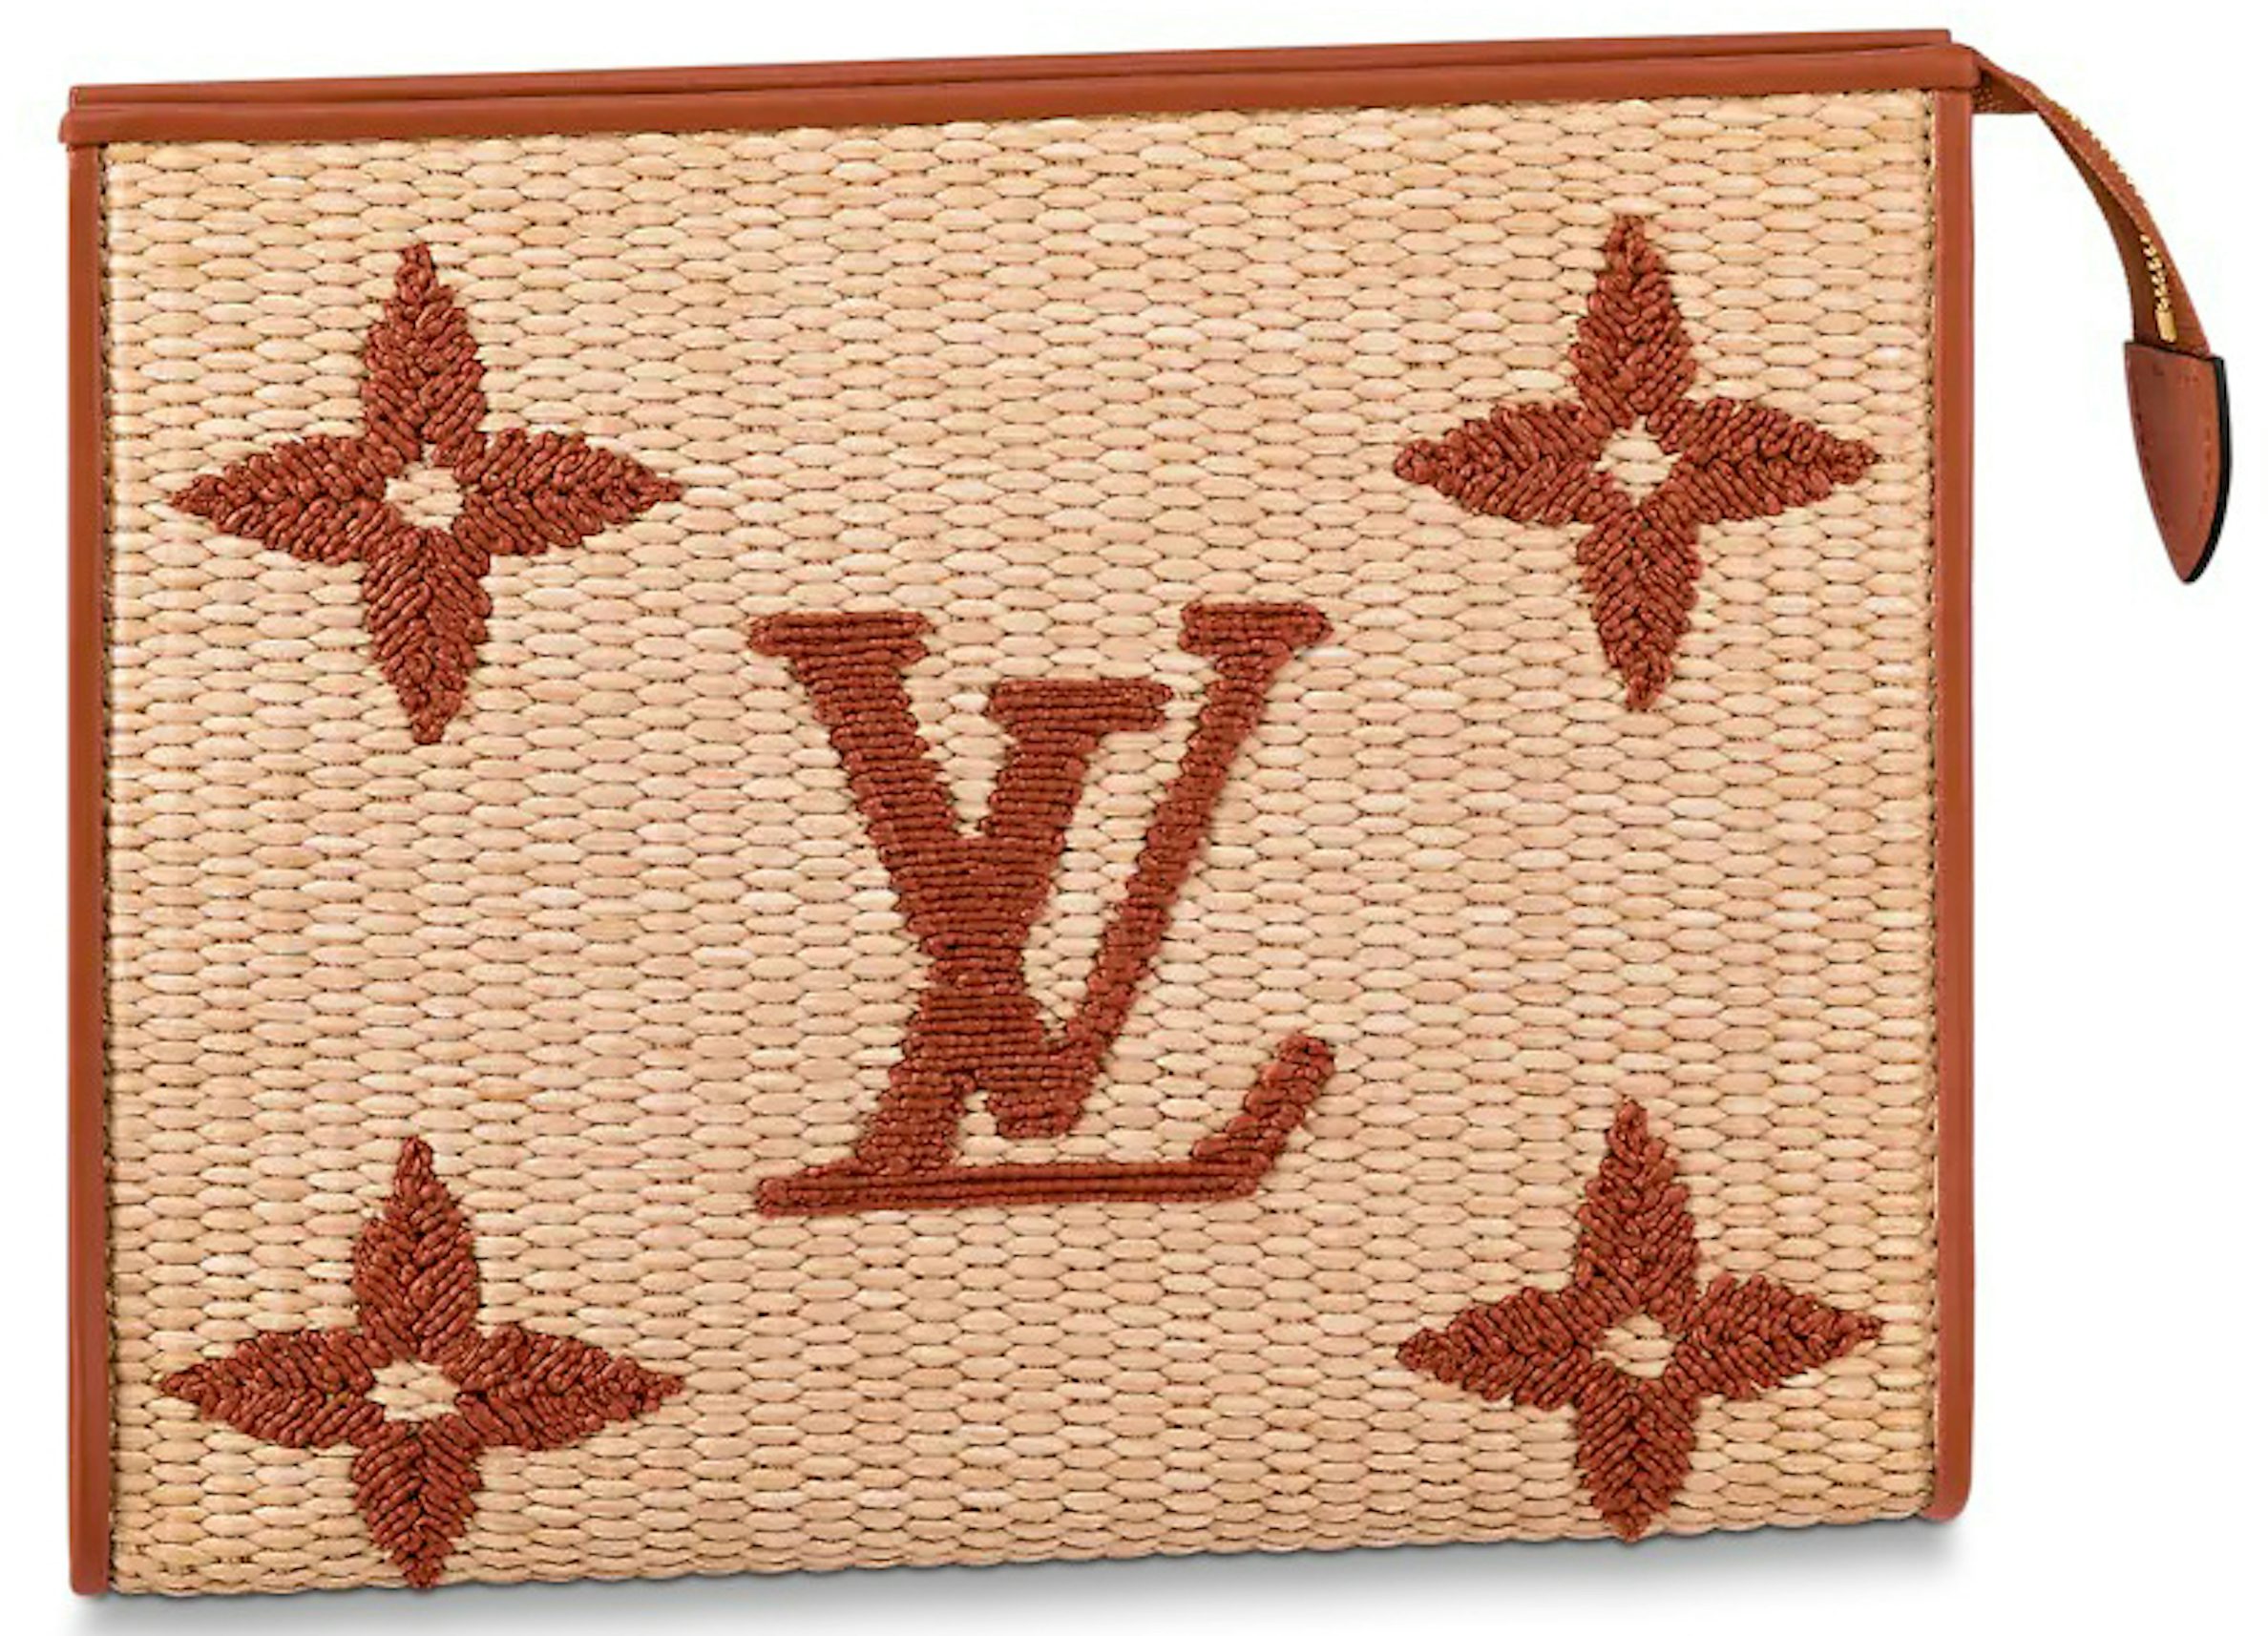 Louis Vuitton Game On Monogram Heart Toiletry Pouch 26 Poche